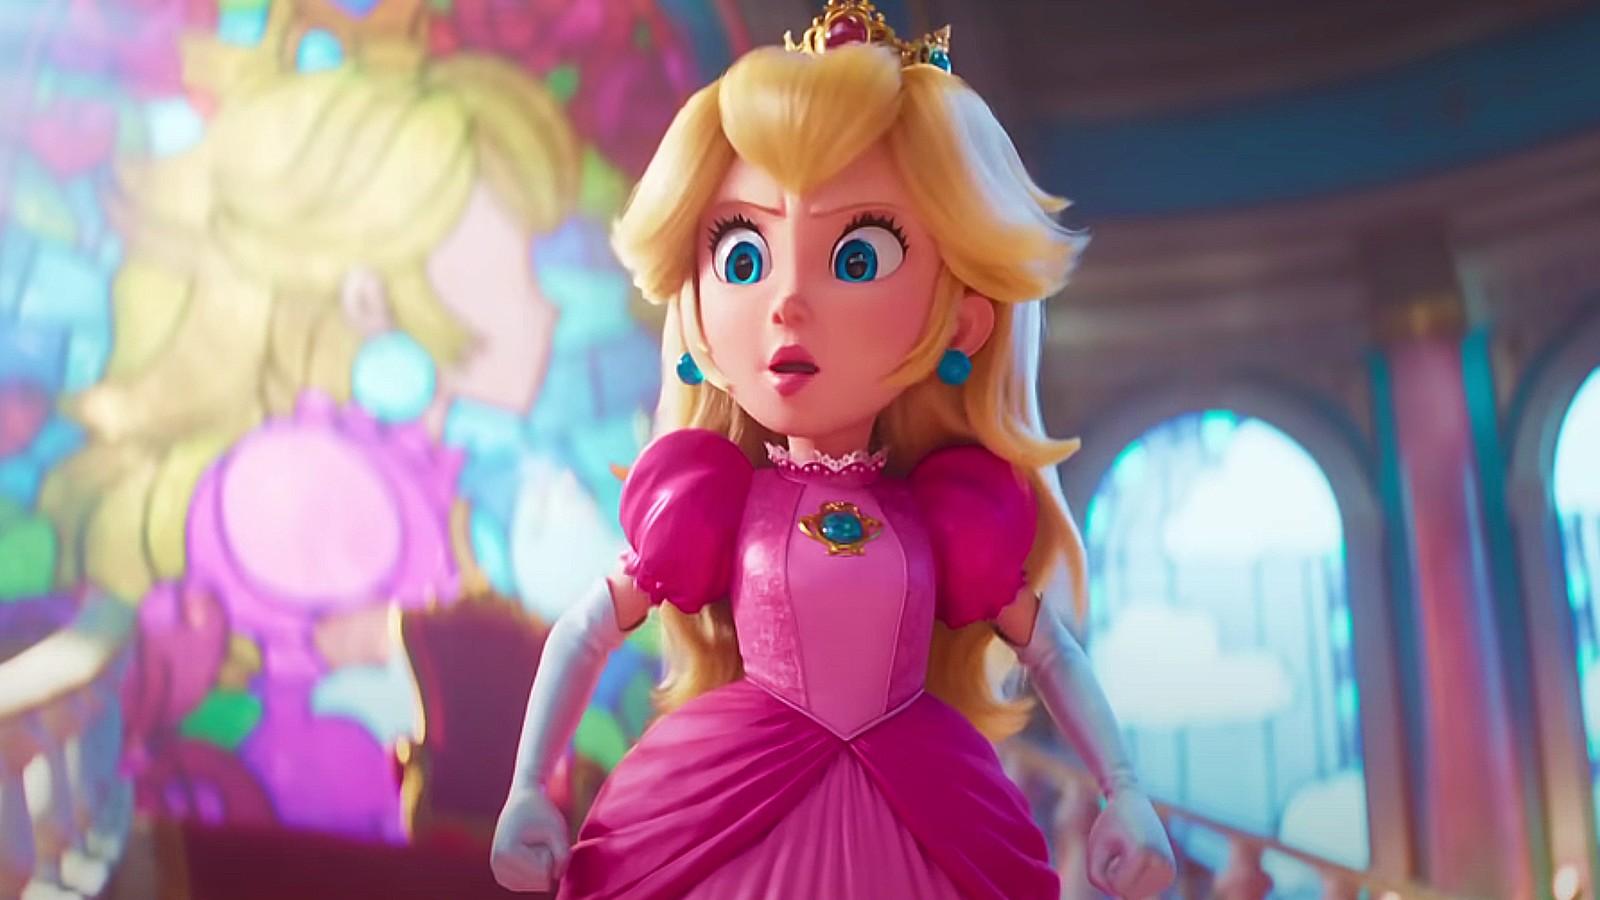 Princess Peach in the new Super Mario Bros movie